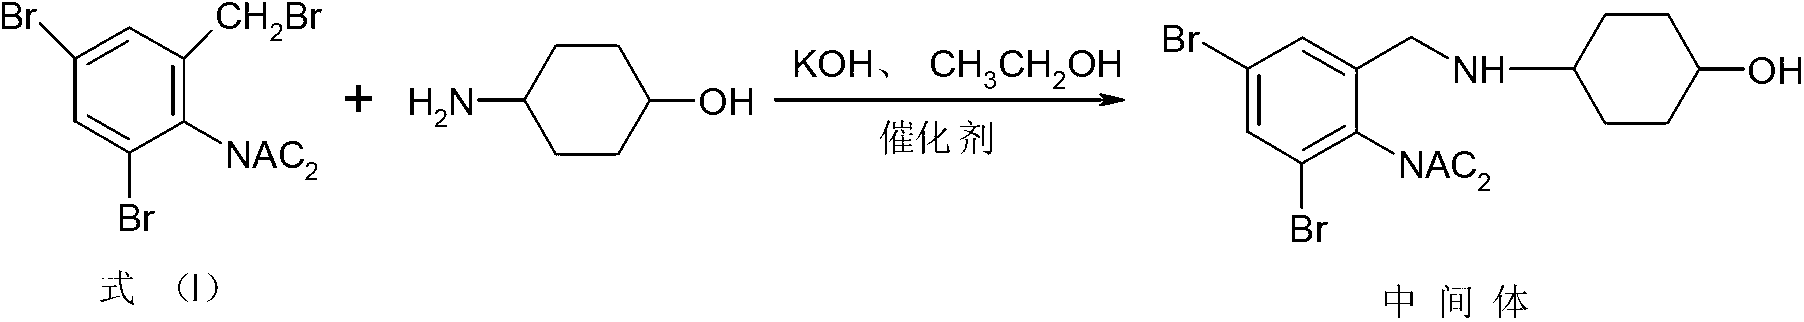 Ambroxol hydrochloride compound refining method